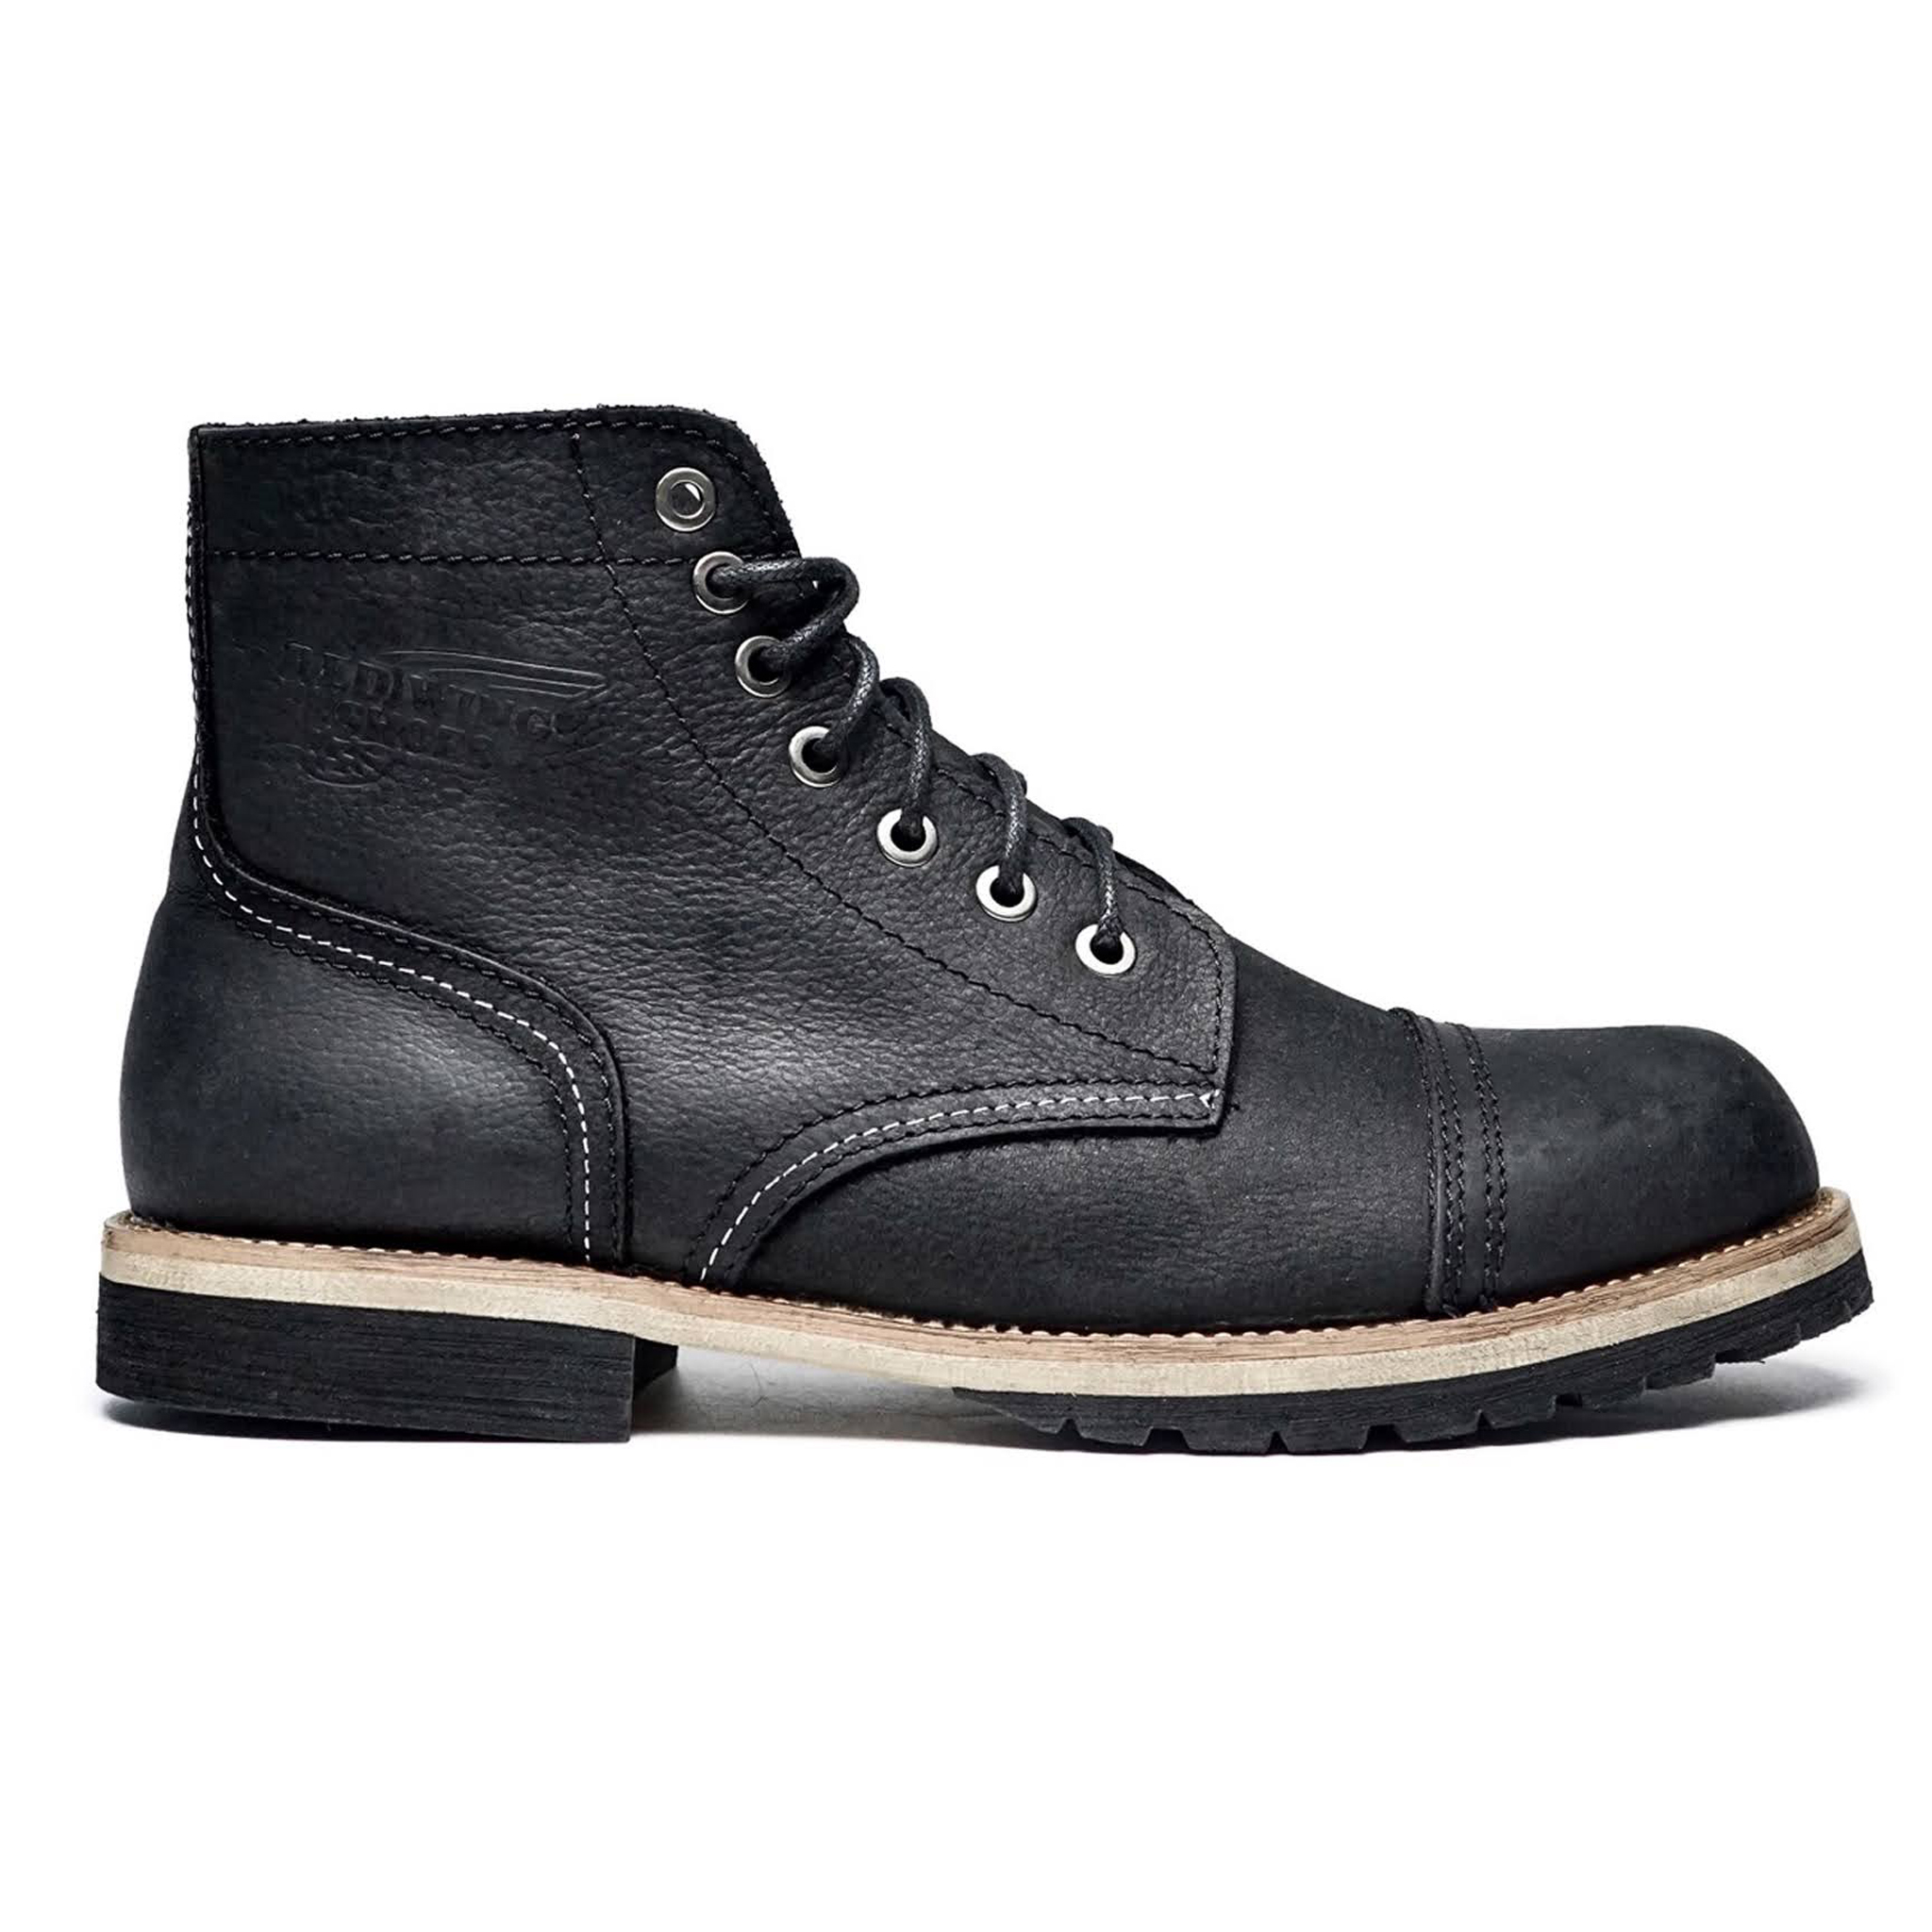 Giày Boots Nam Cao Cổ – Giày Da Nam Cổ cao Tefoss – Da Bò Thật 100% – HN678 Black size 38-44